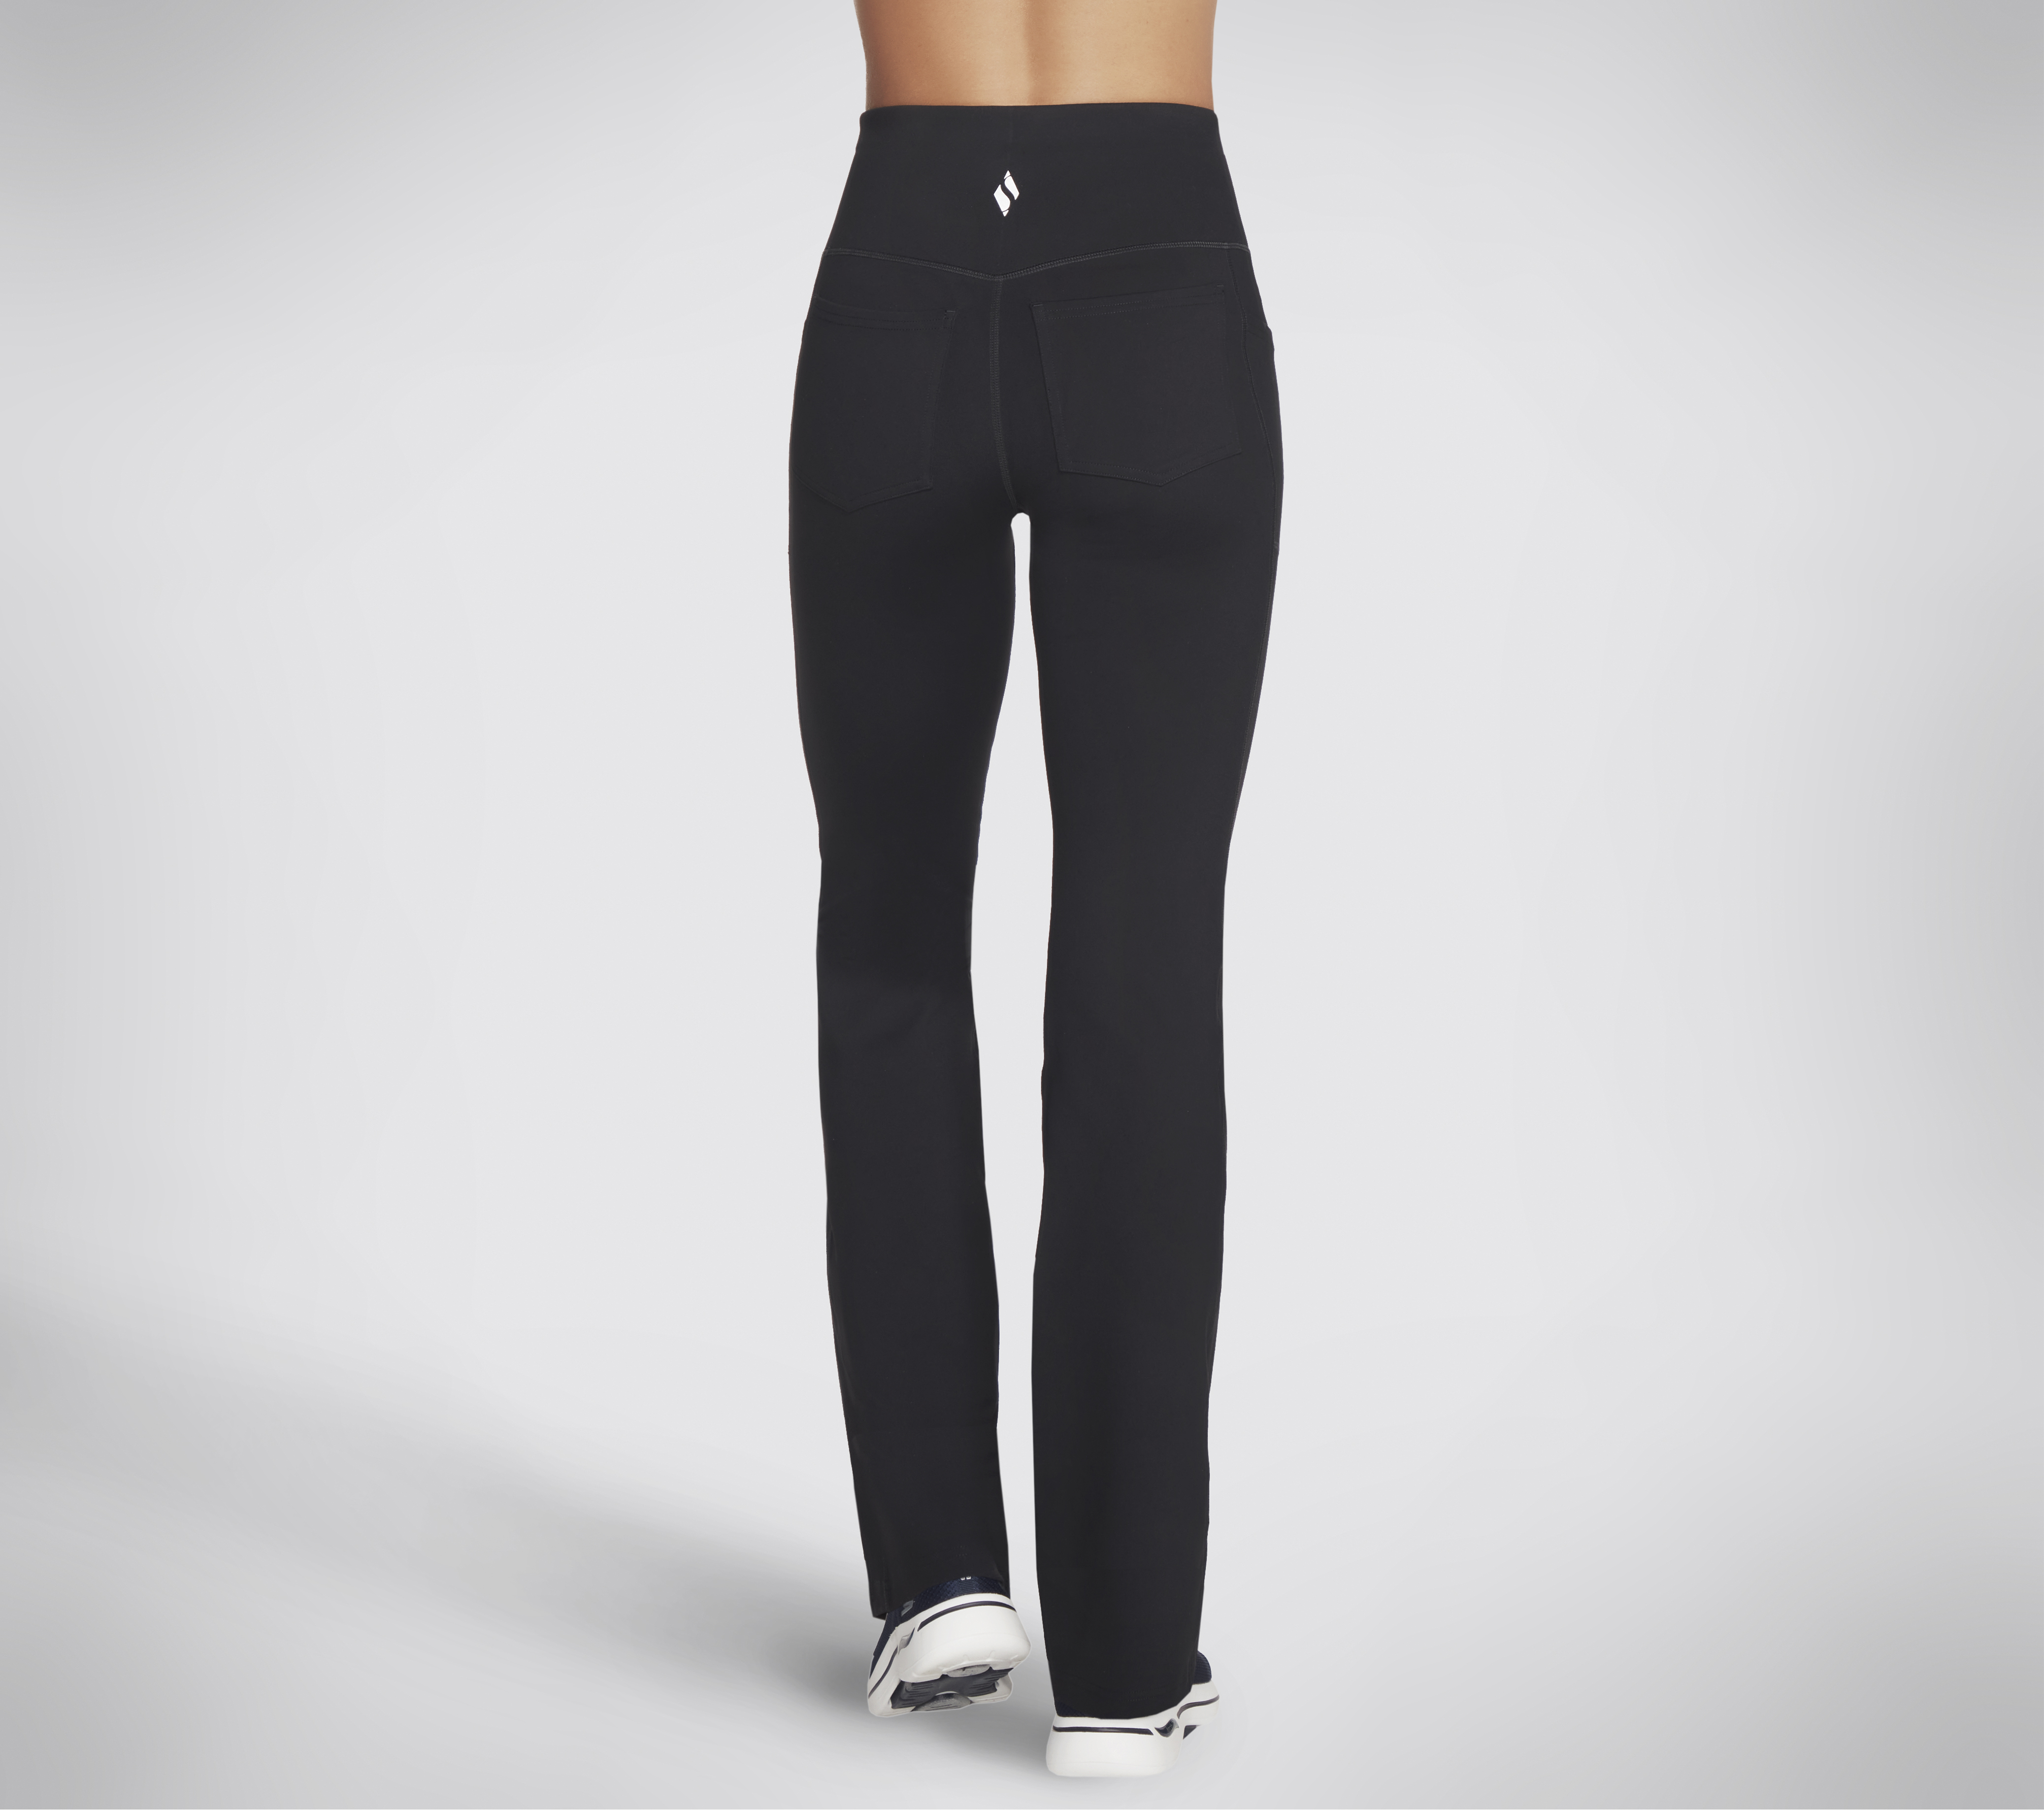  SKECHERS Gowalk Jogging Pants Raspberry XL : Clothing